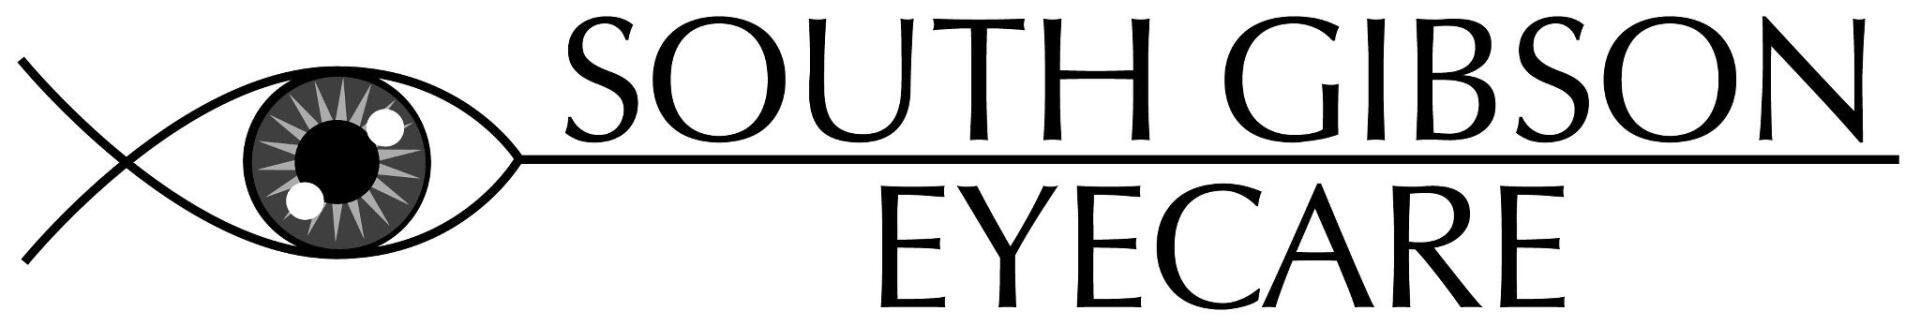 south gibsion eyecare logo